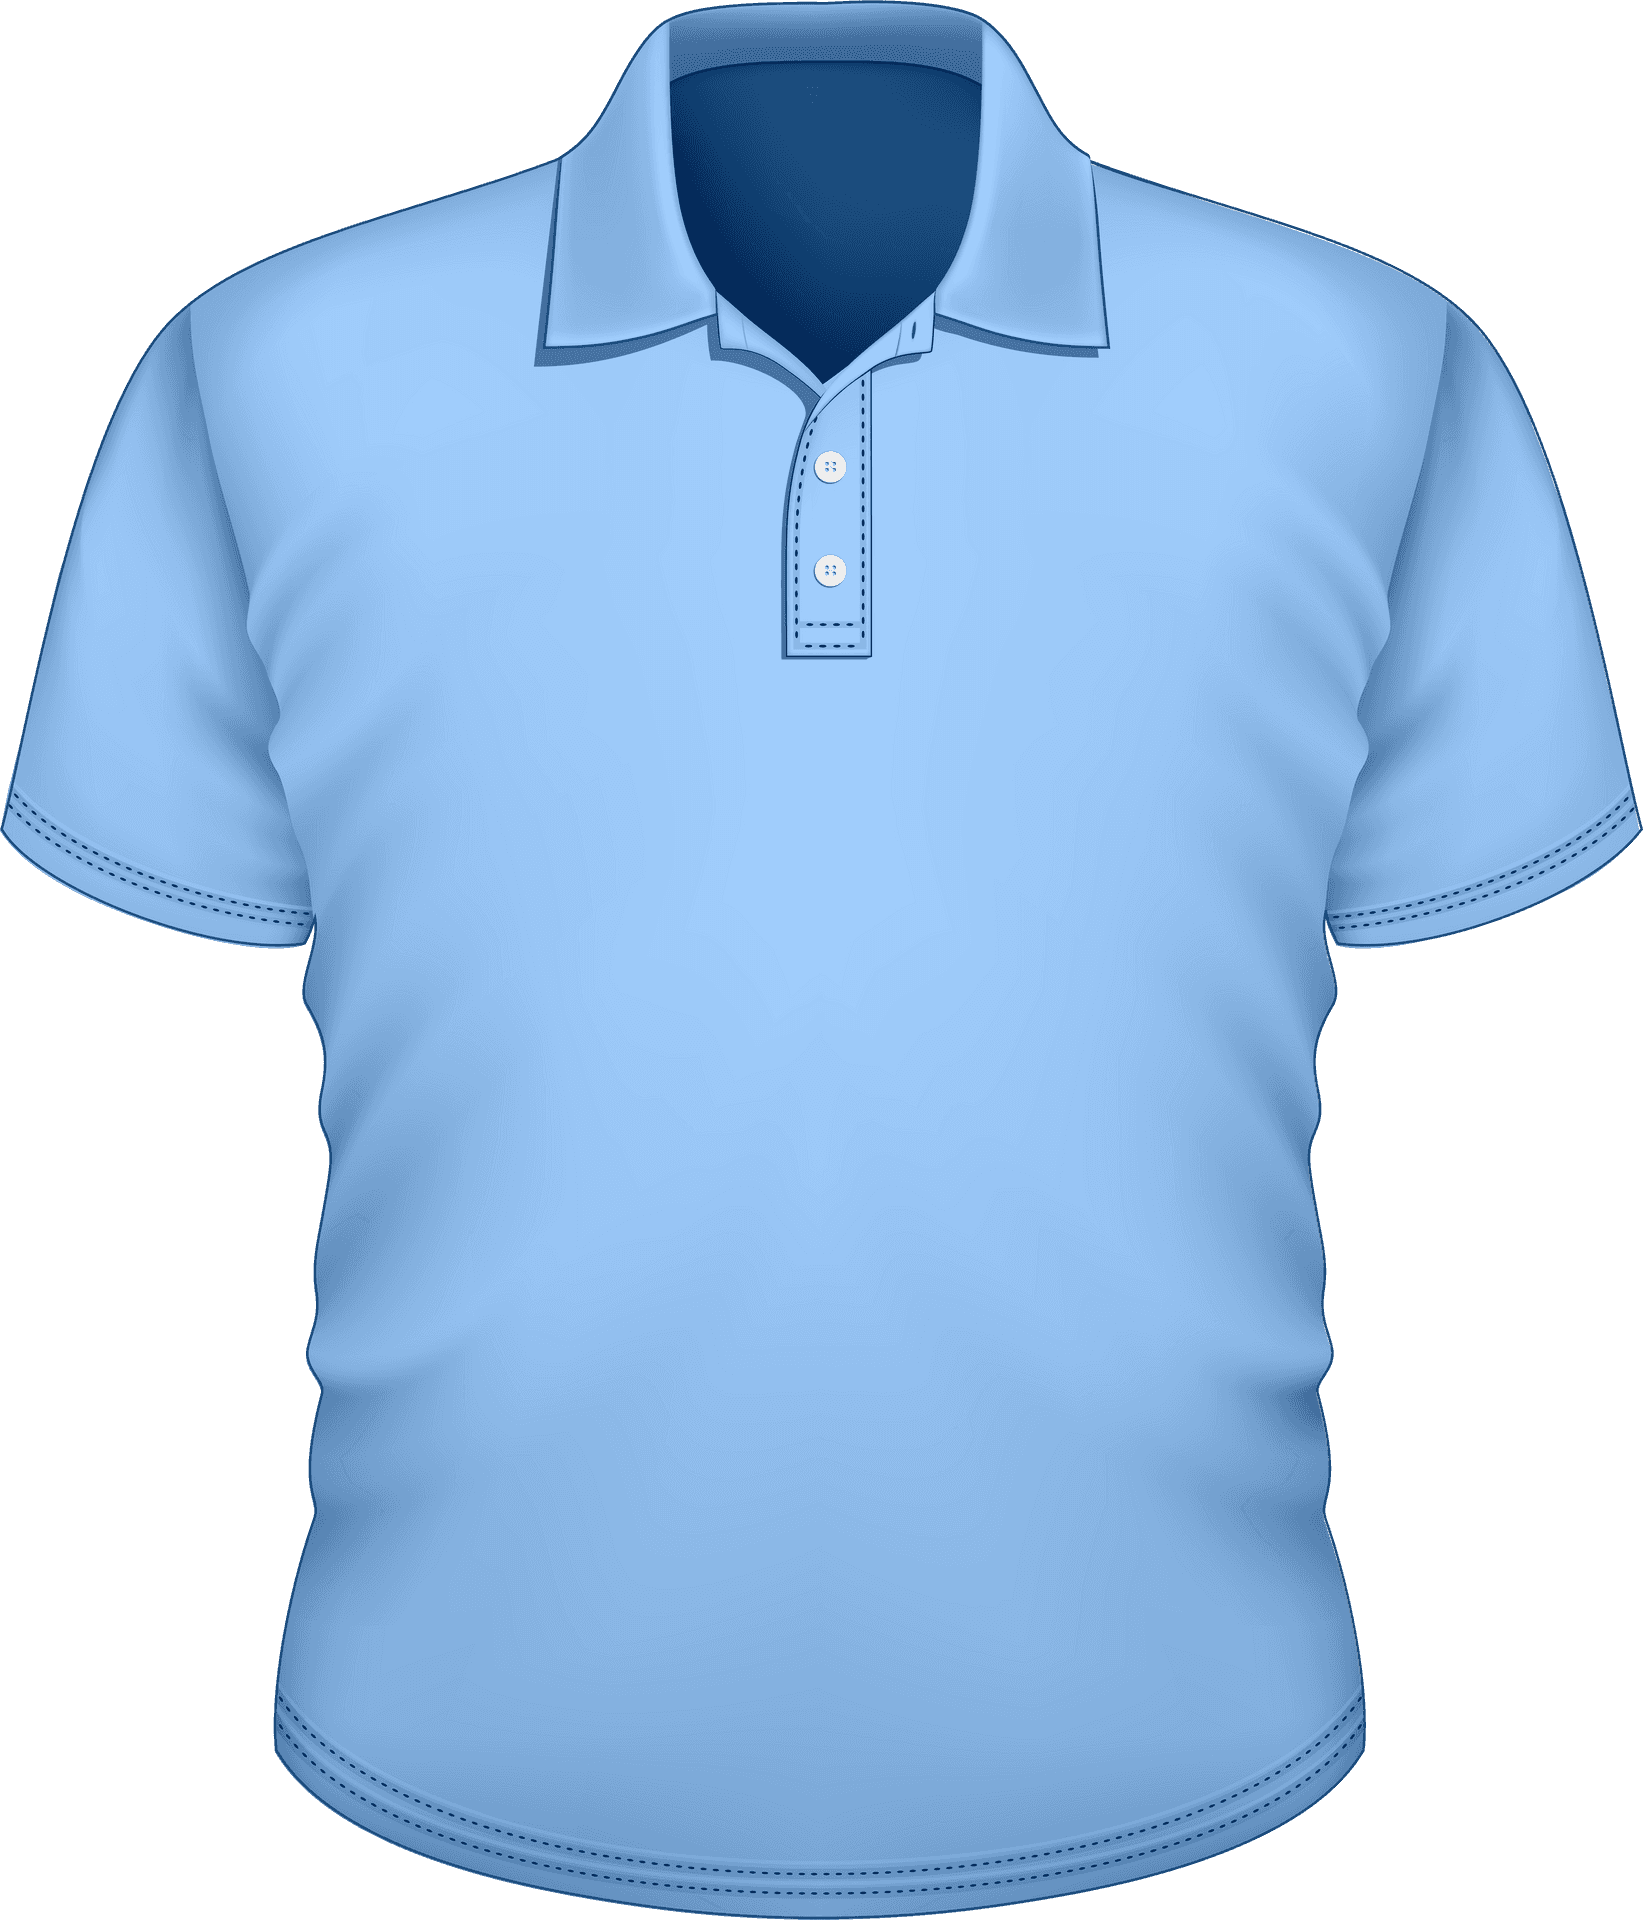 Download Light Blue Polo Shirt Mockup | Wallpapers.com